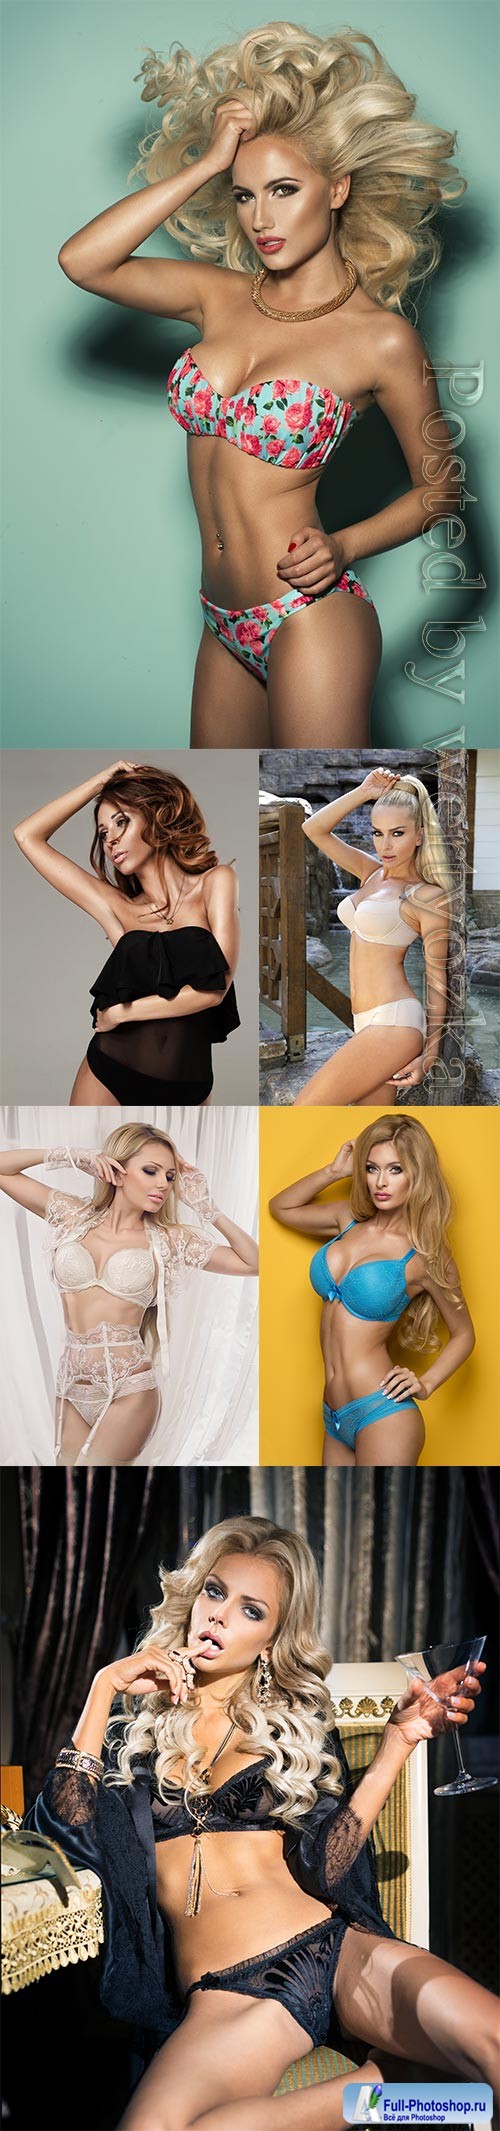 Luxury women in lingerie posing stock photo vol 25